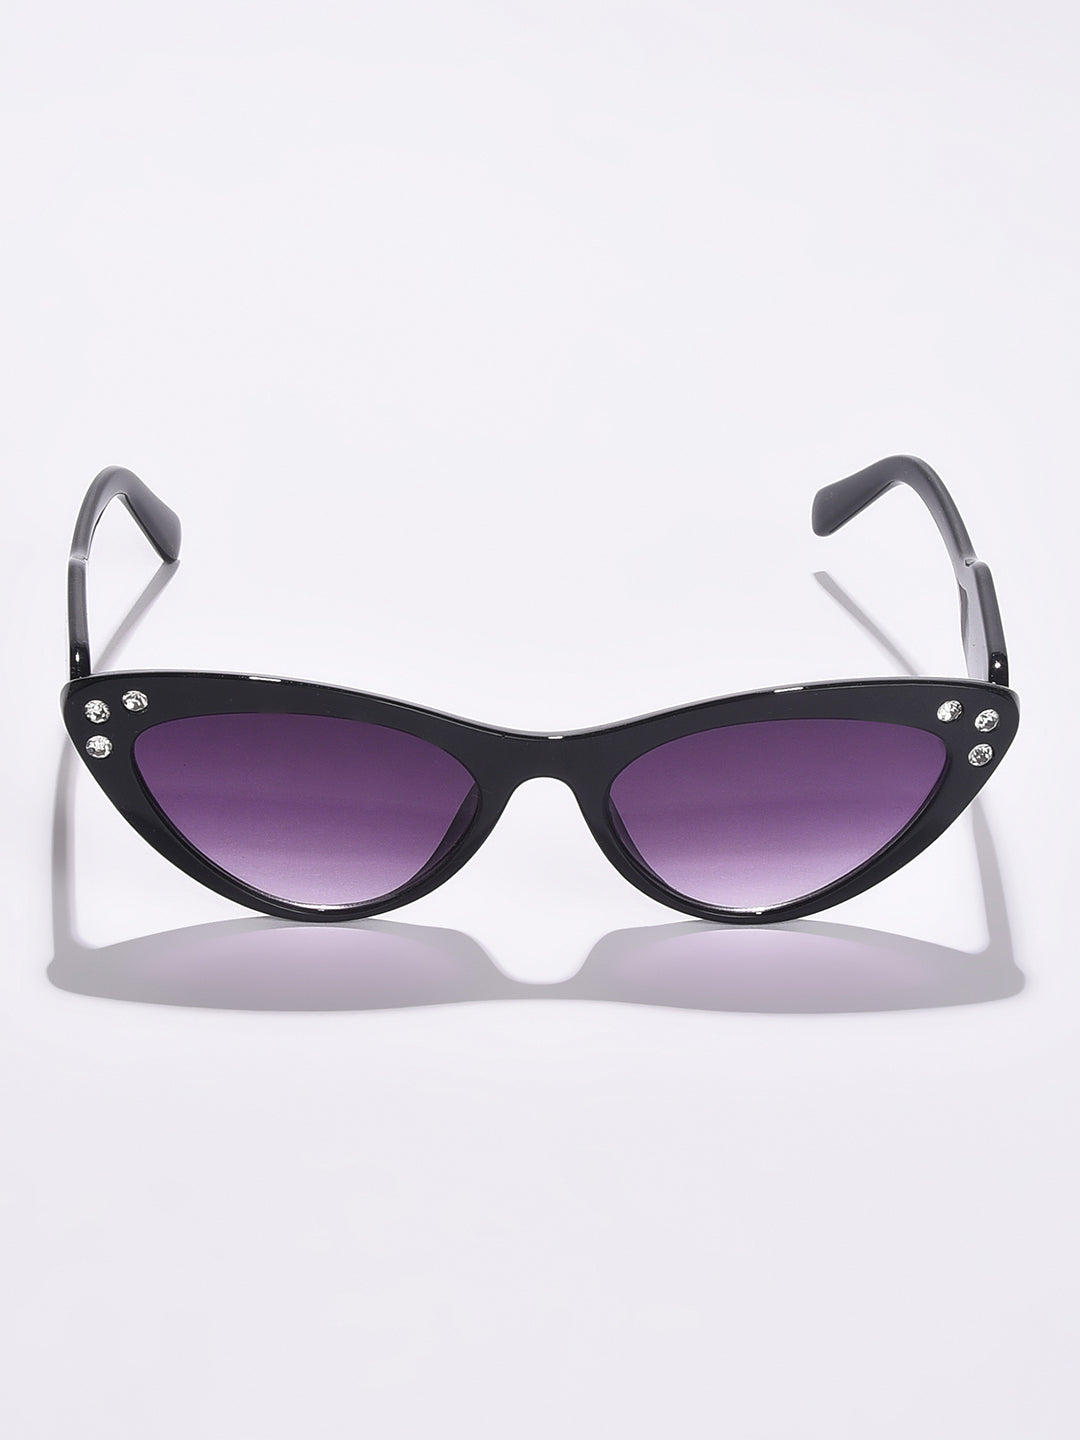 Black Lens Black Cateye Sunglasses